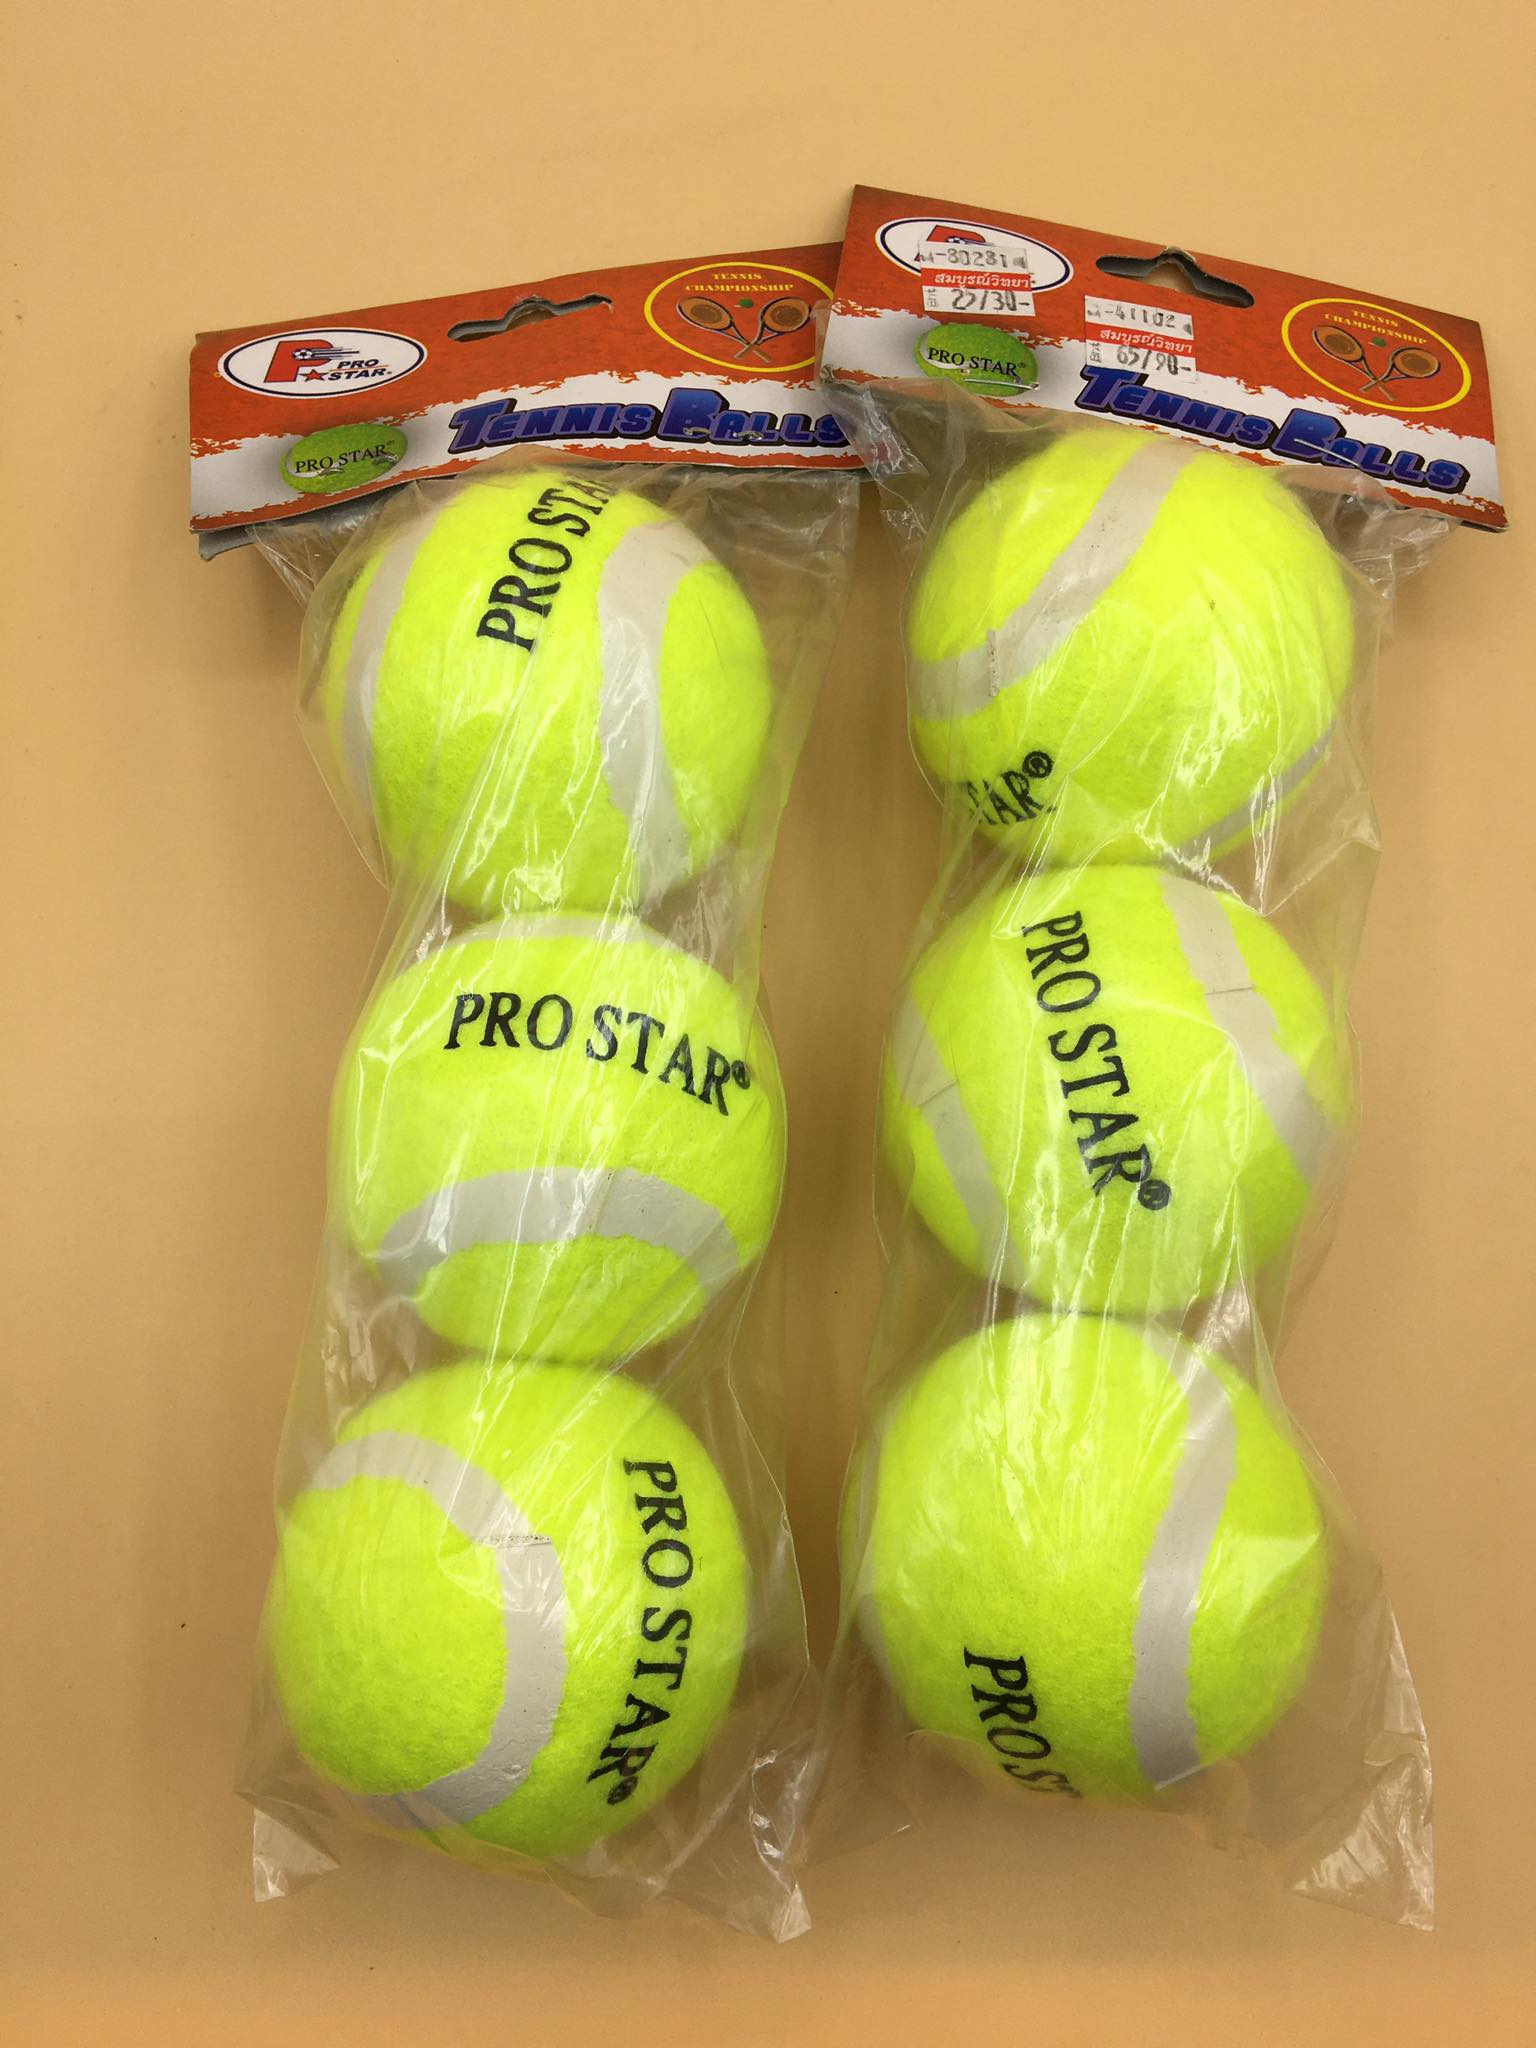 PRO STAR Tennis Ball ลูกเทนนิส โปรสตาร์ แพ็คละ 3 ลูก